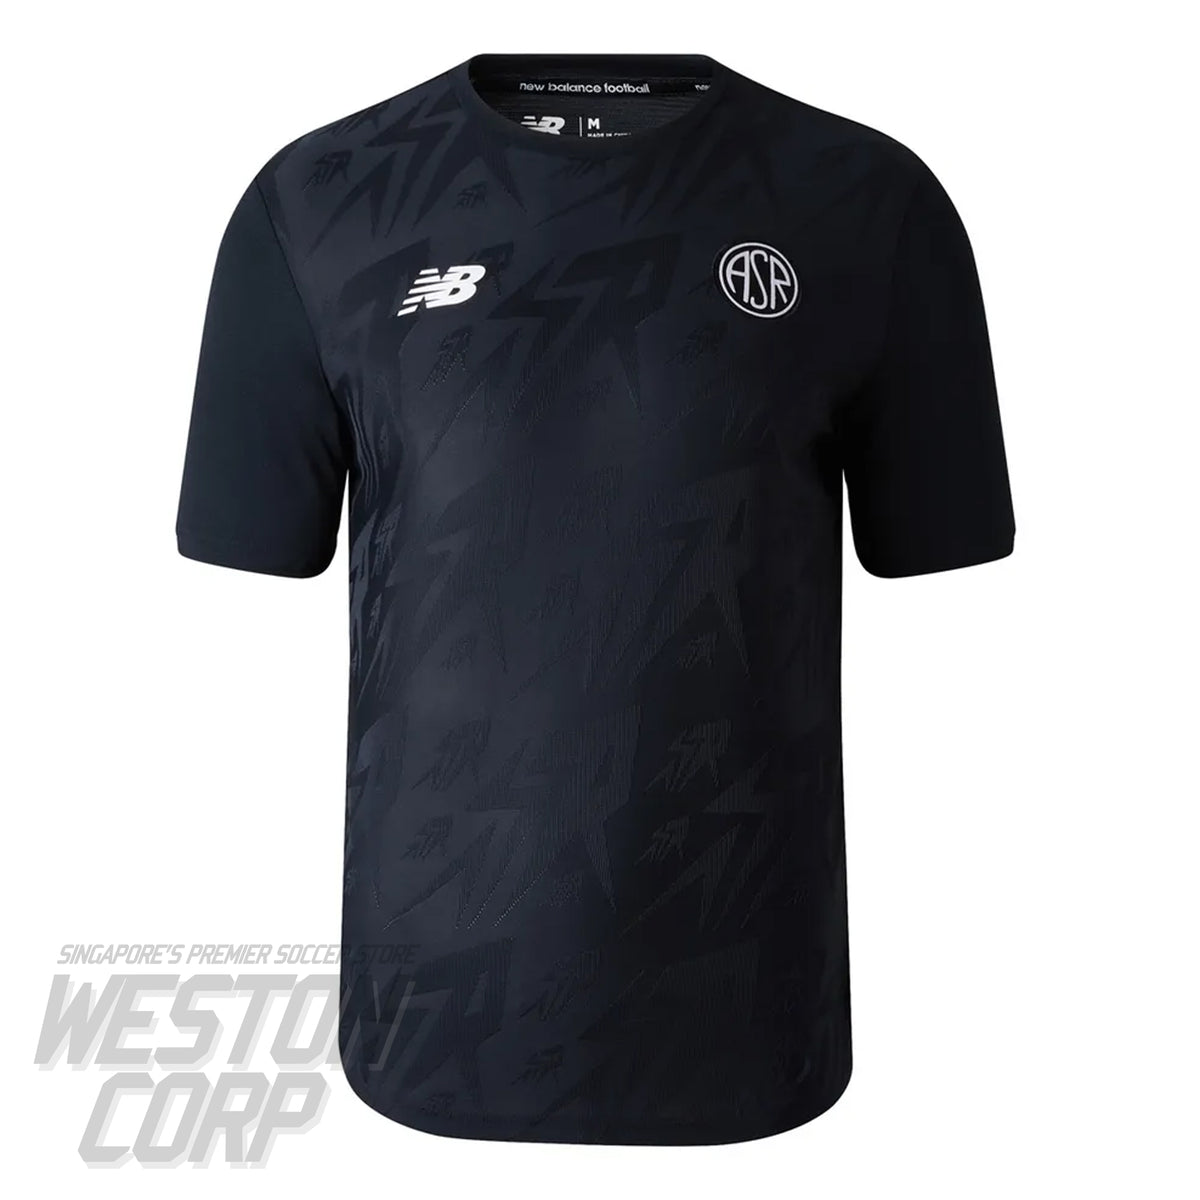 Celtic 16/17 New Balance Third Kit - Football Shirt Culture